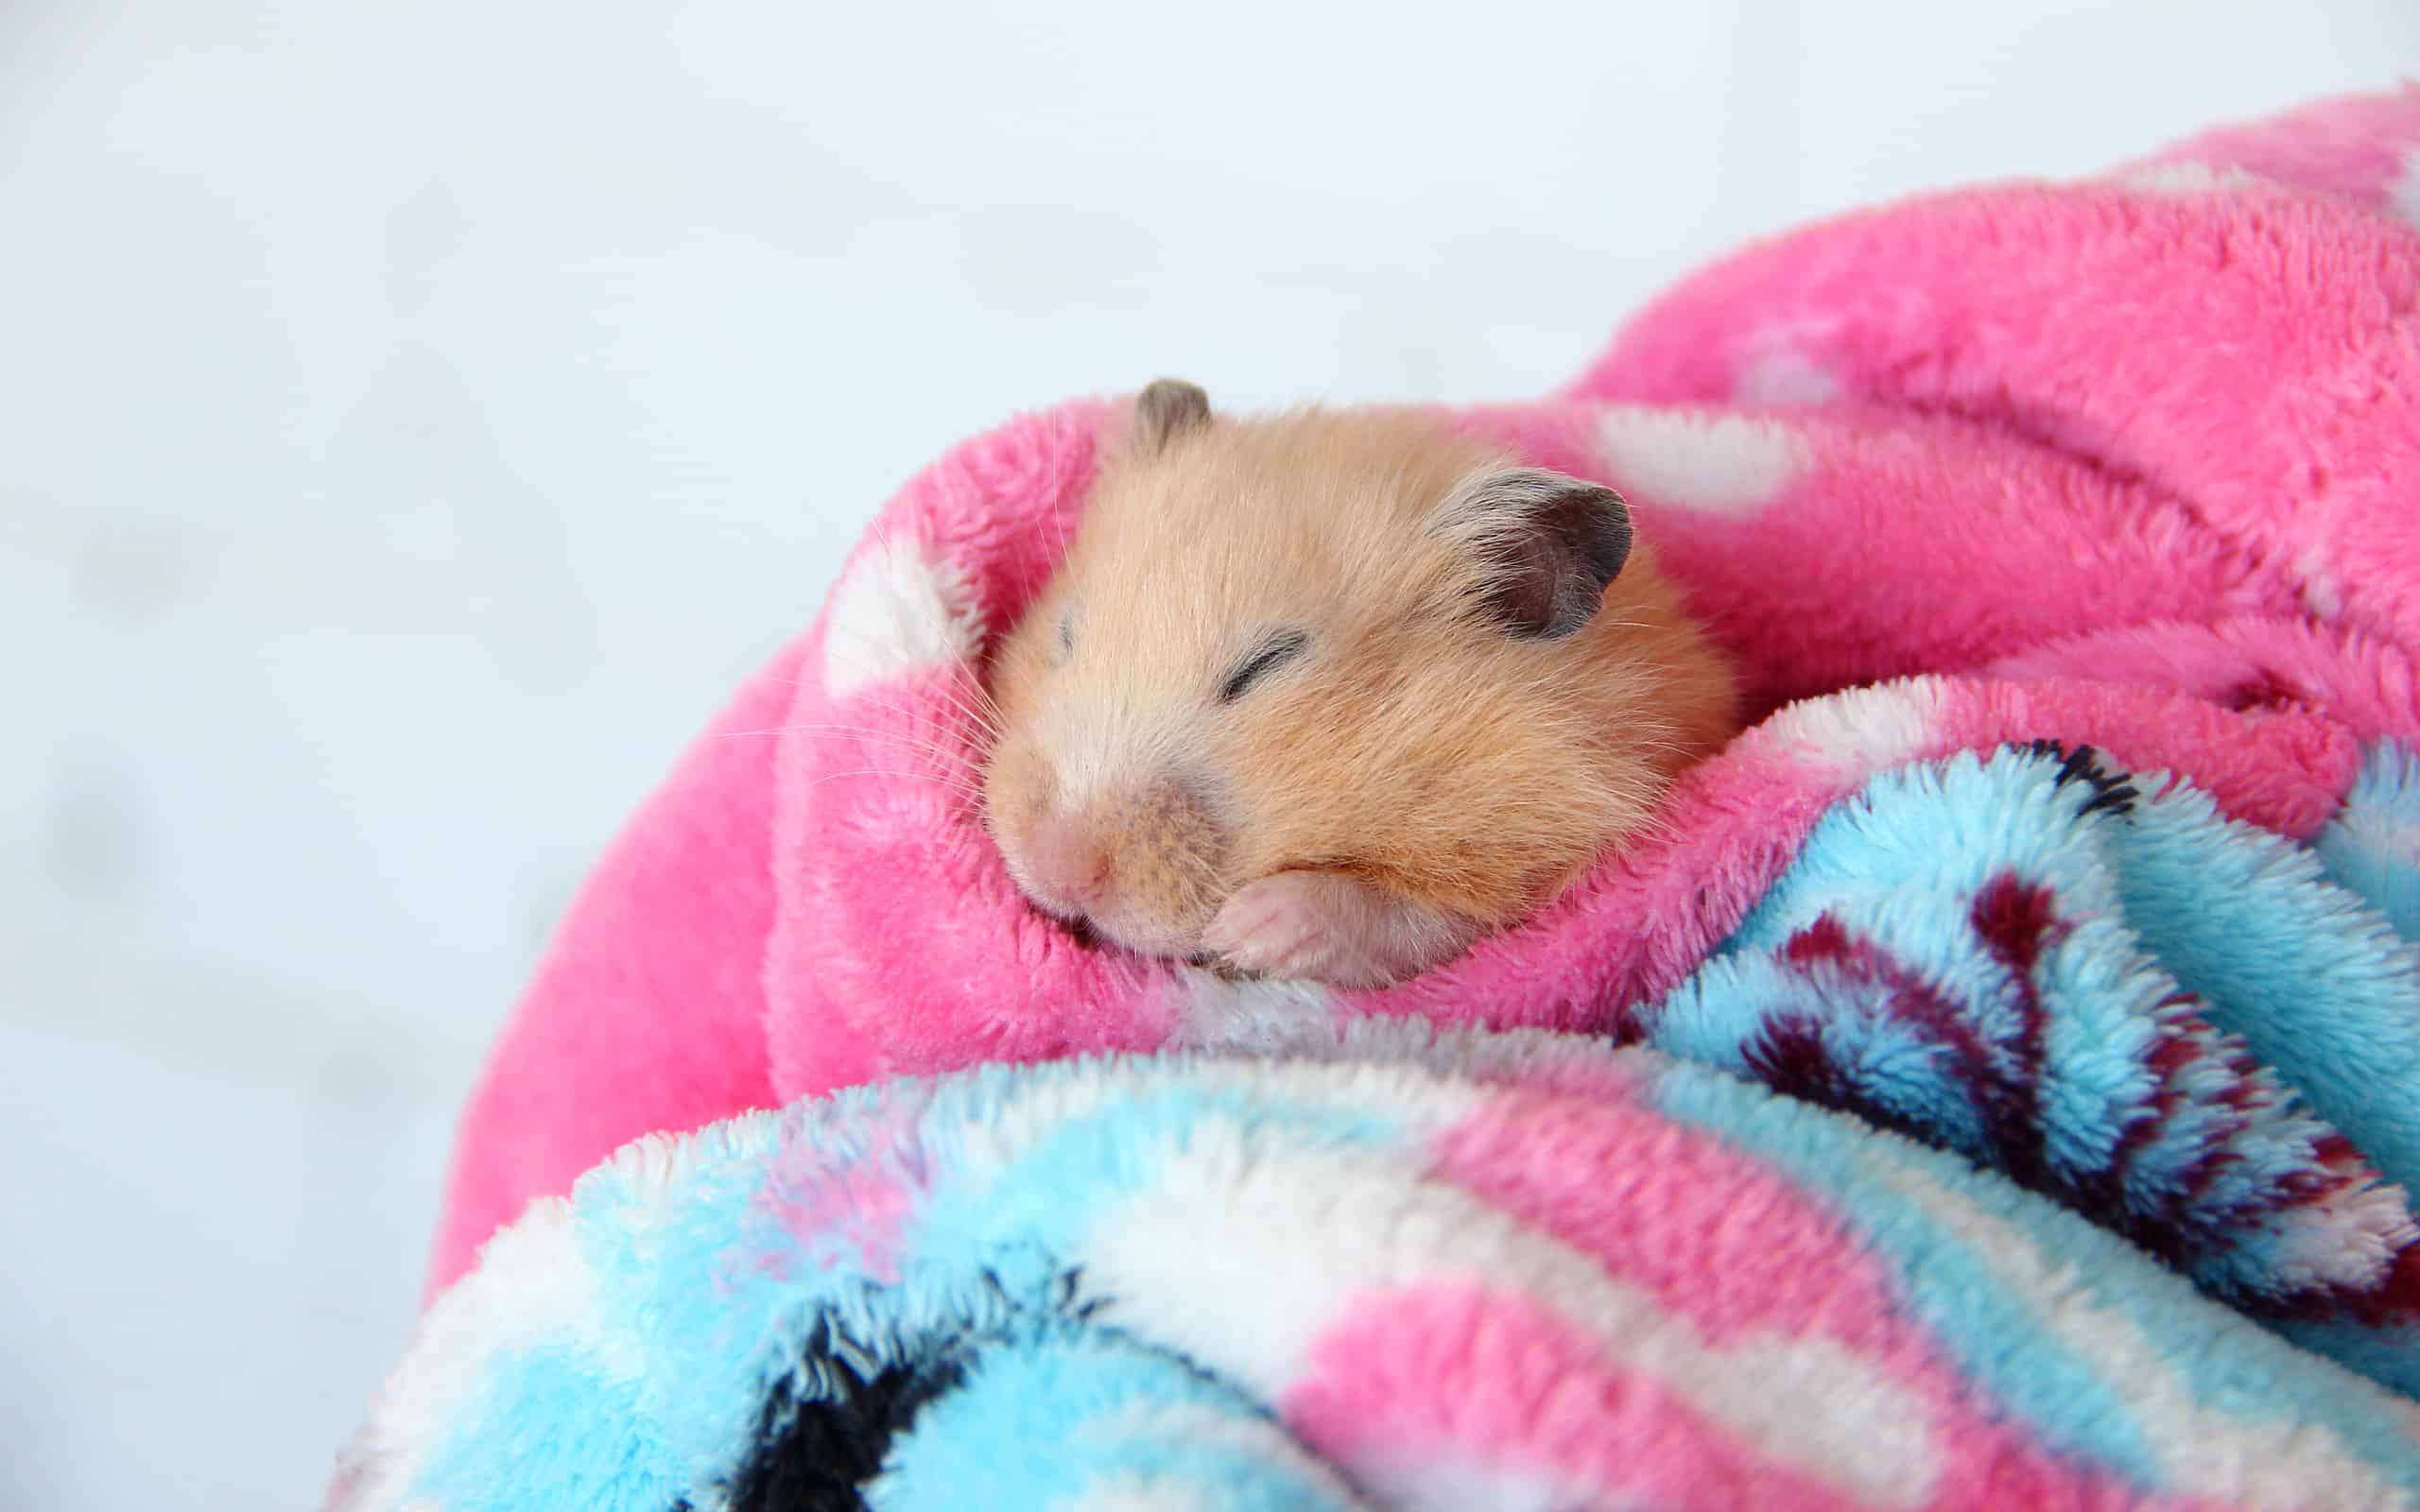 Syrian hamster sleeping comfortably in the bathrobe